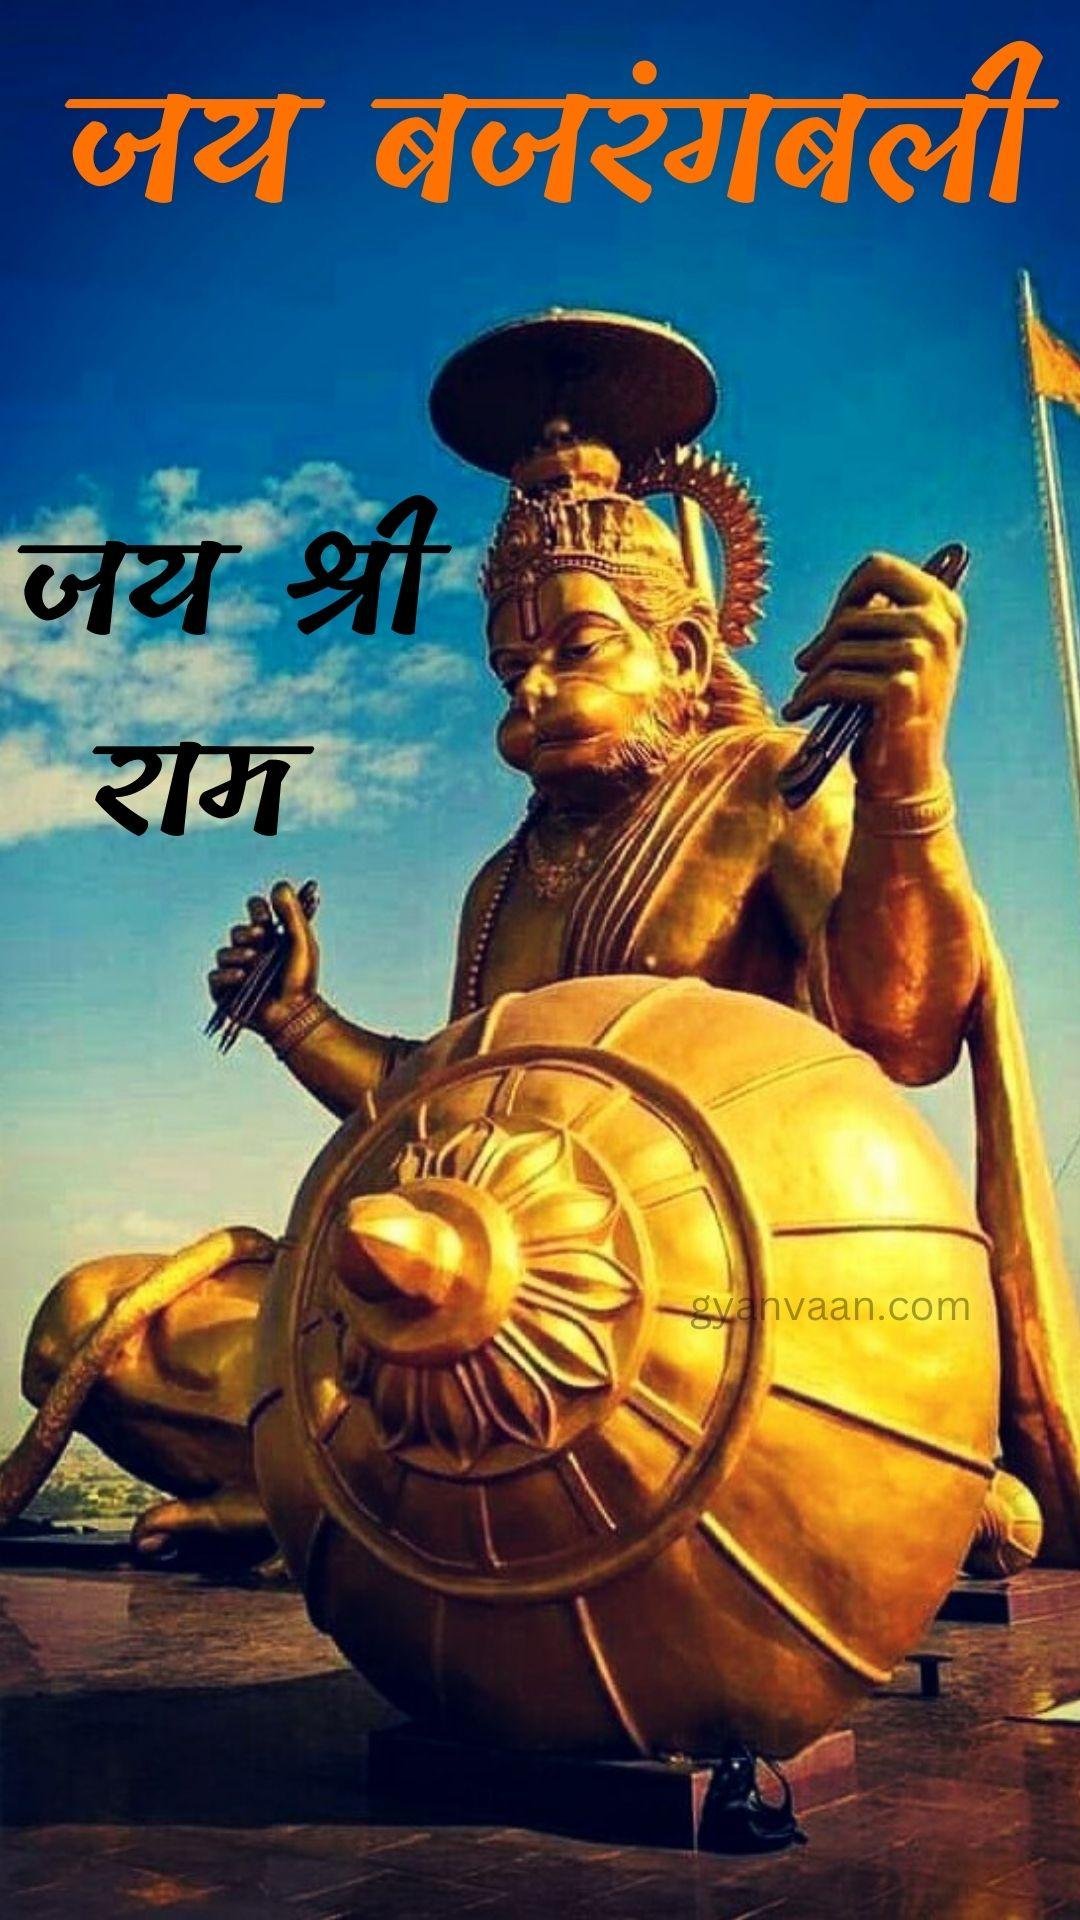 Hanuman Quotes Shayari And Whatsapp Status For Mobile With Hanuman Images And Photos 68 - Hanuman Images